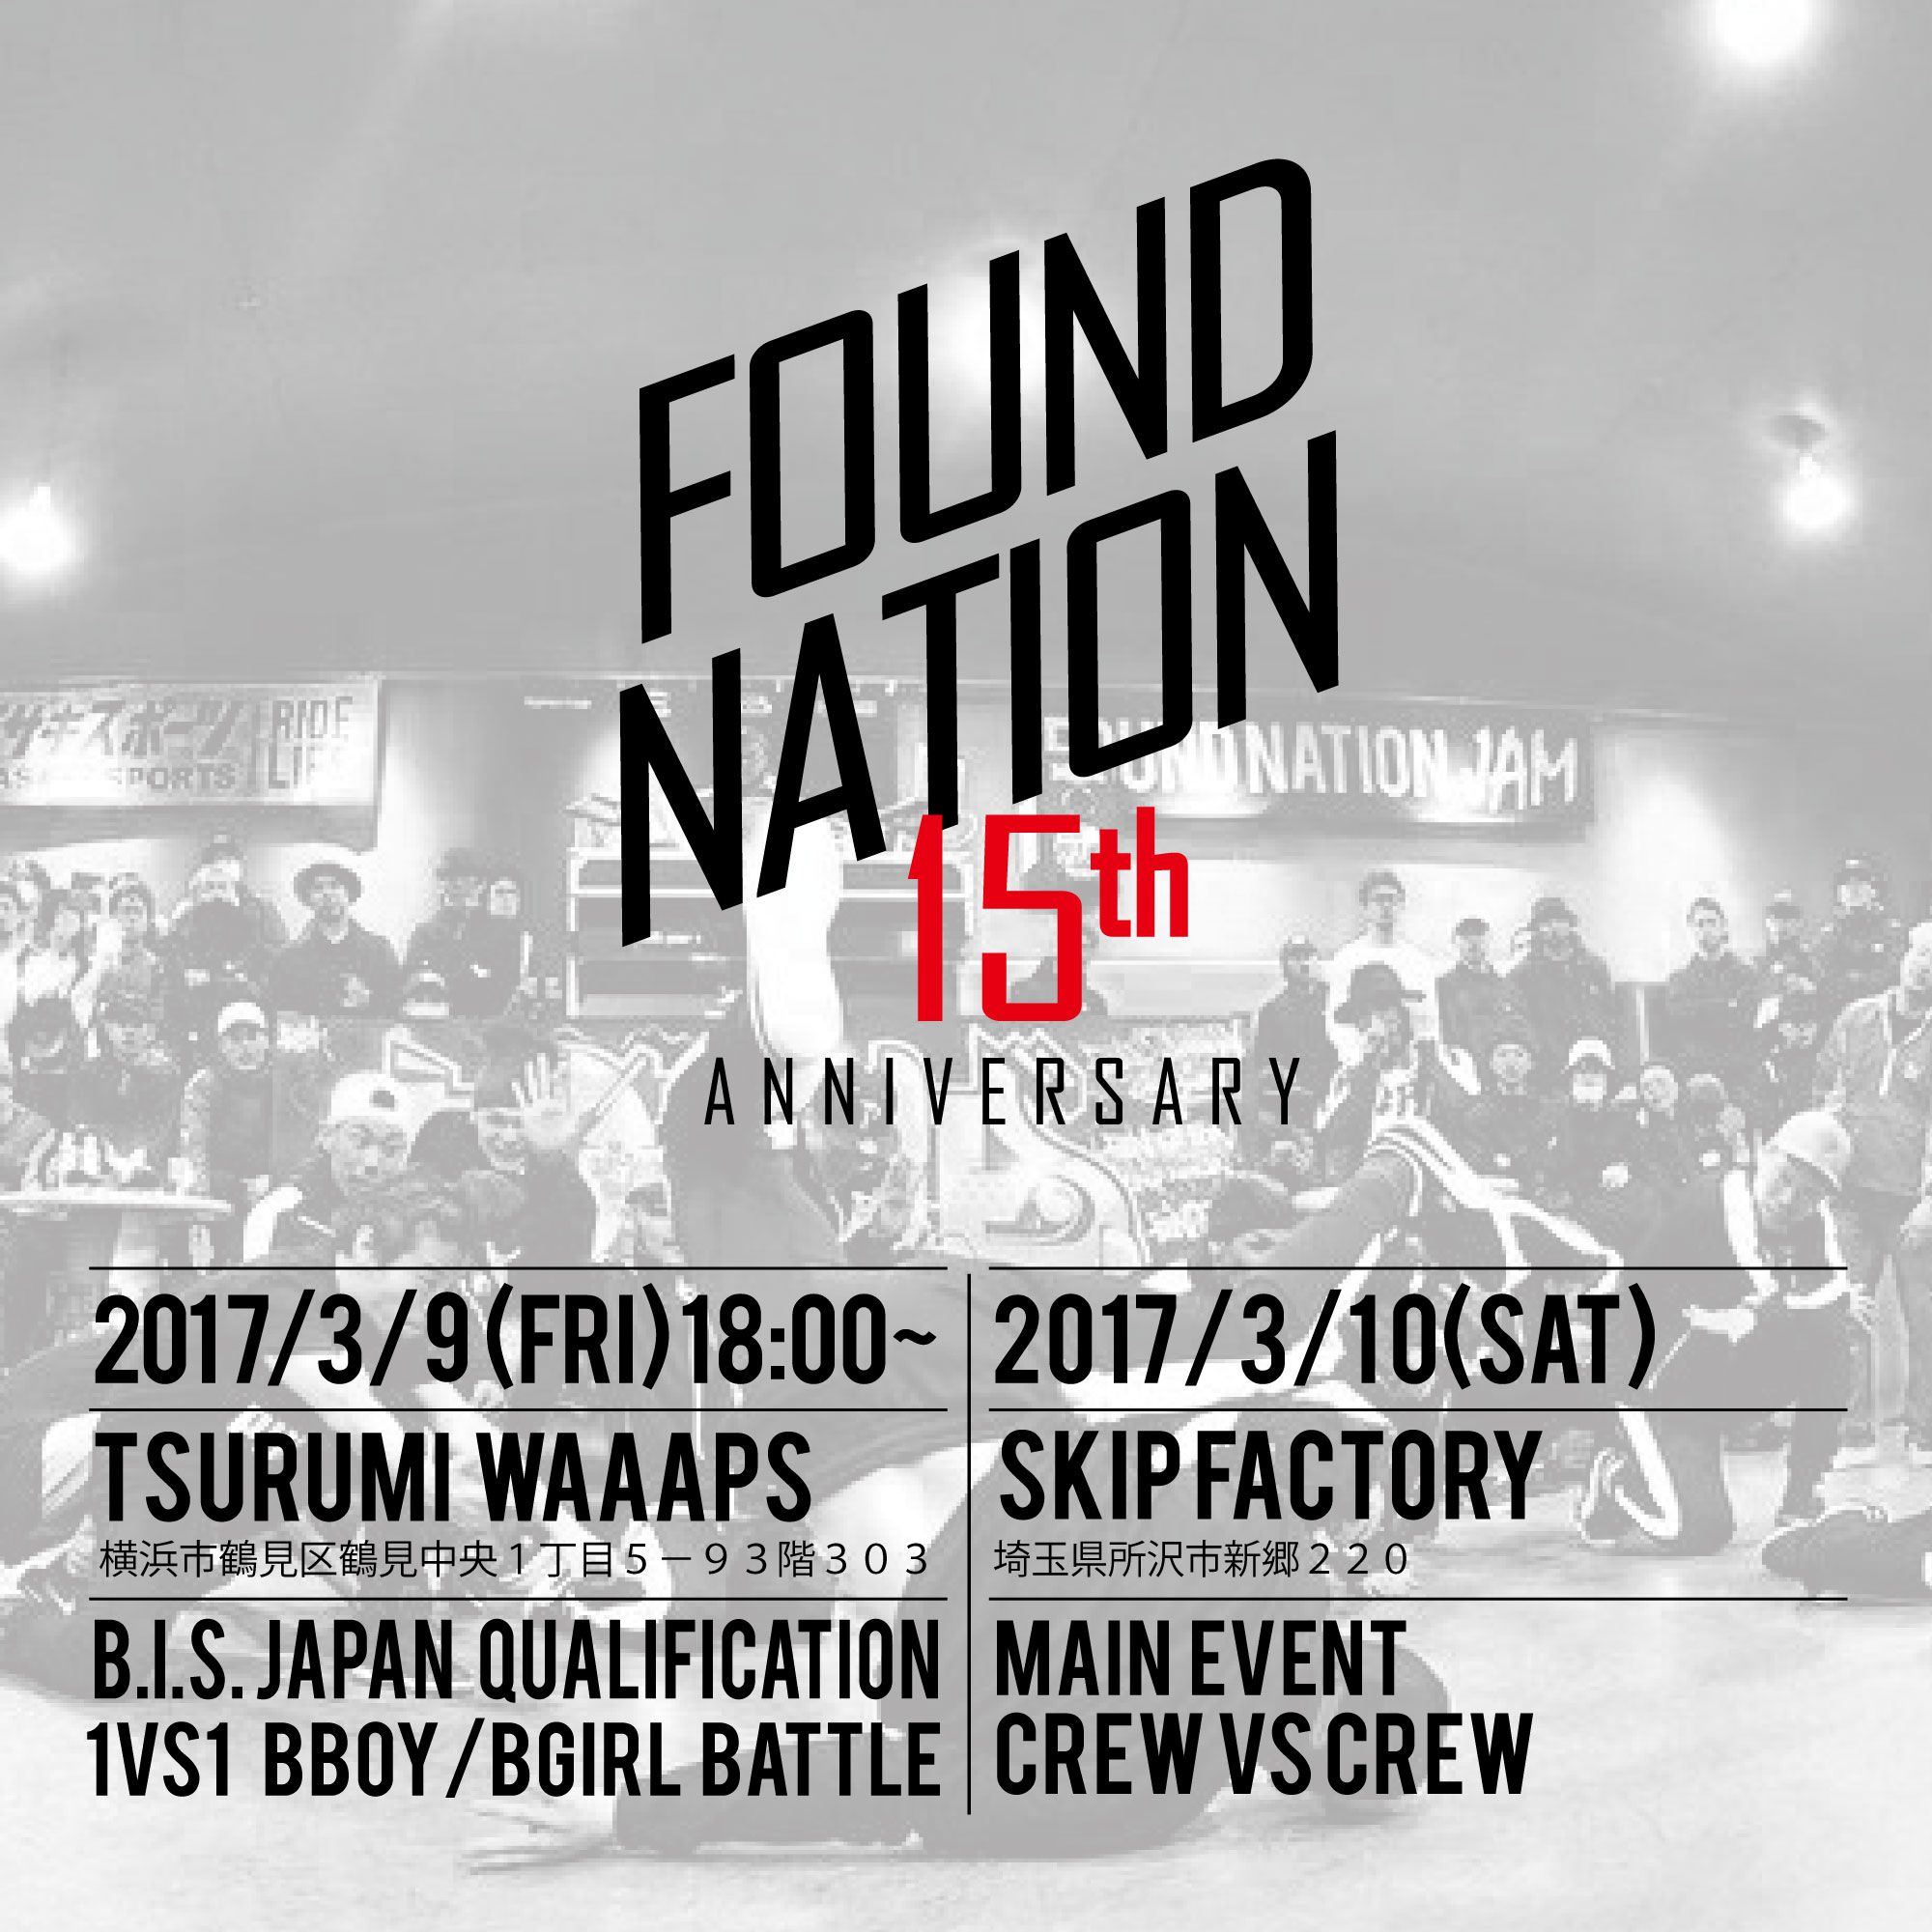 2018/3/9,10 Found Nation Jam 2018 -15th year anniversary - が開催！！